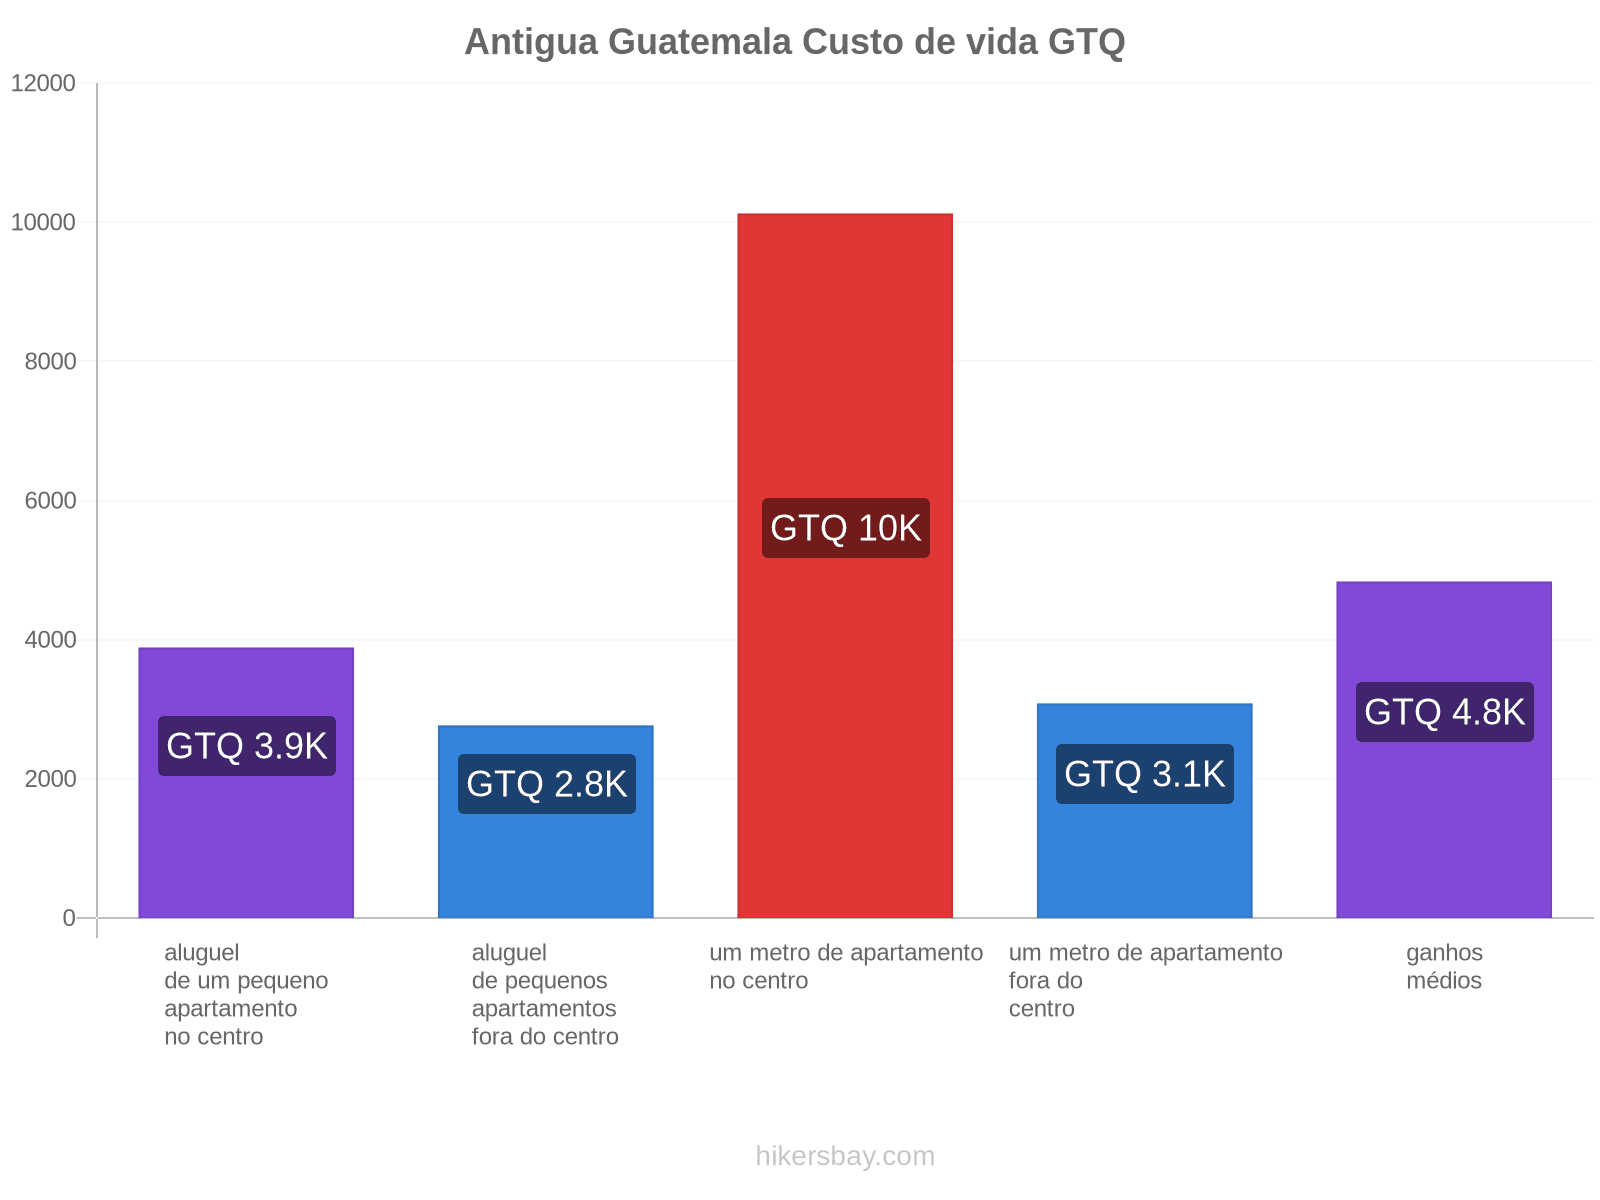 Antigua Guatemala custo de vida hikersbay.com